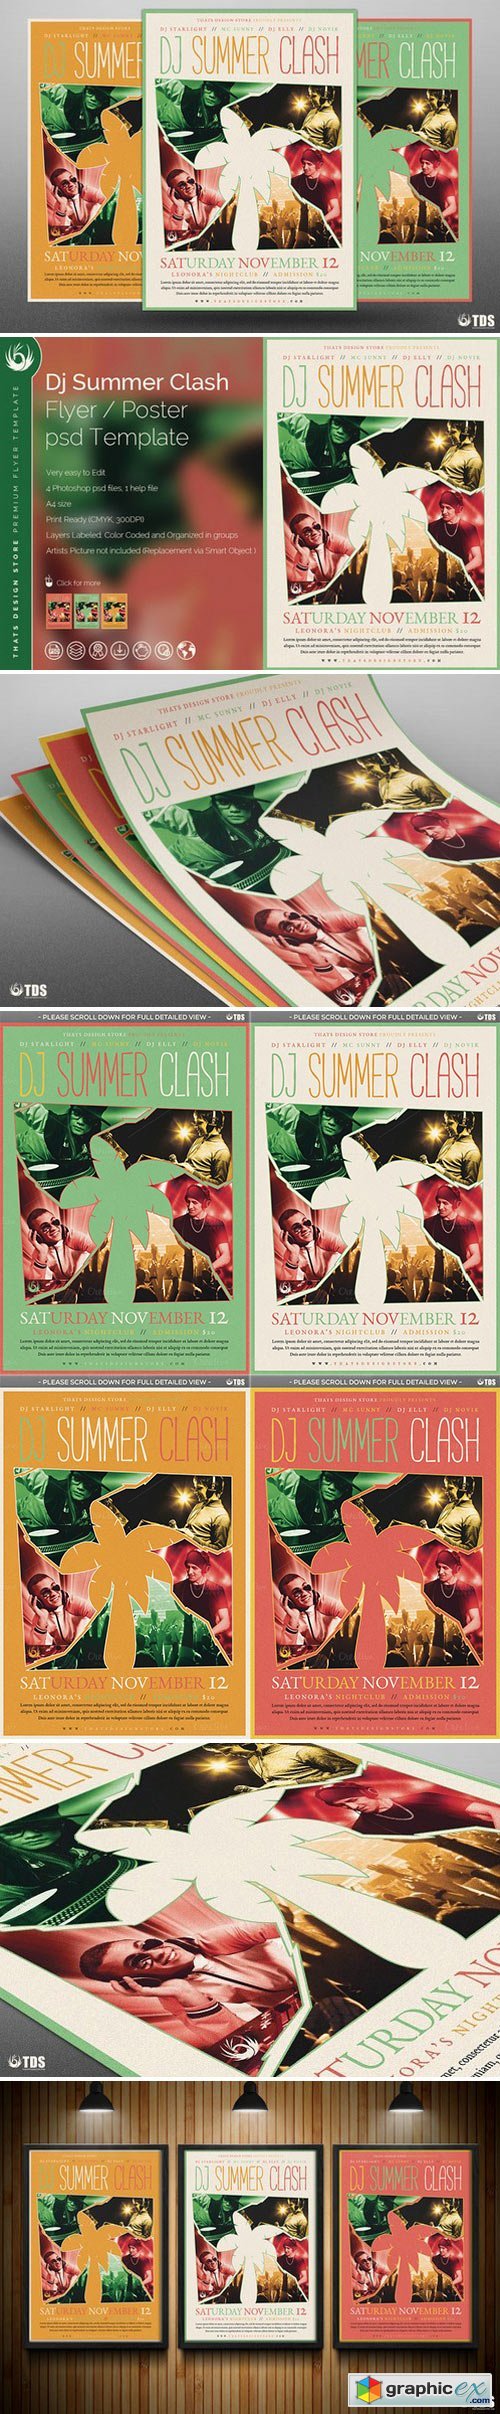 DJ Summer Clash Flyer Template